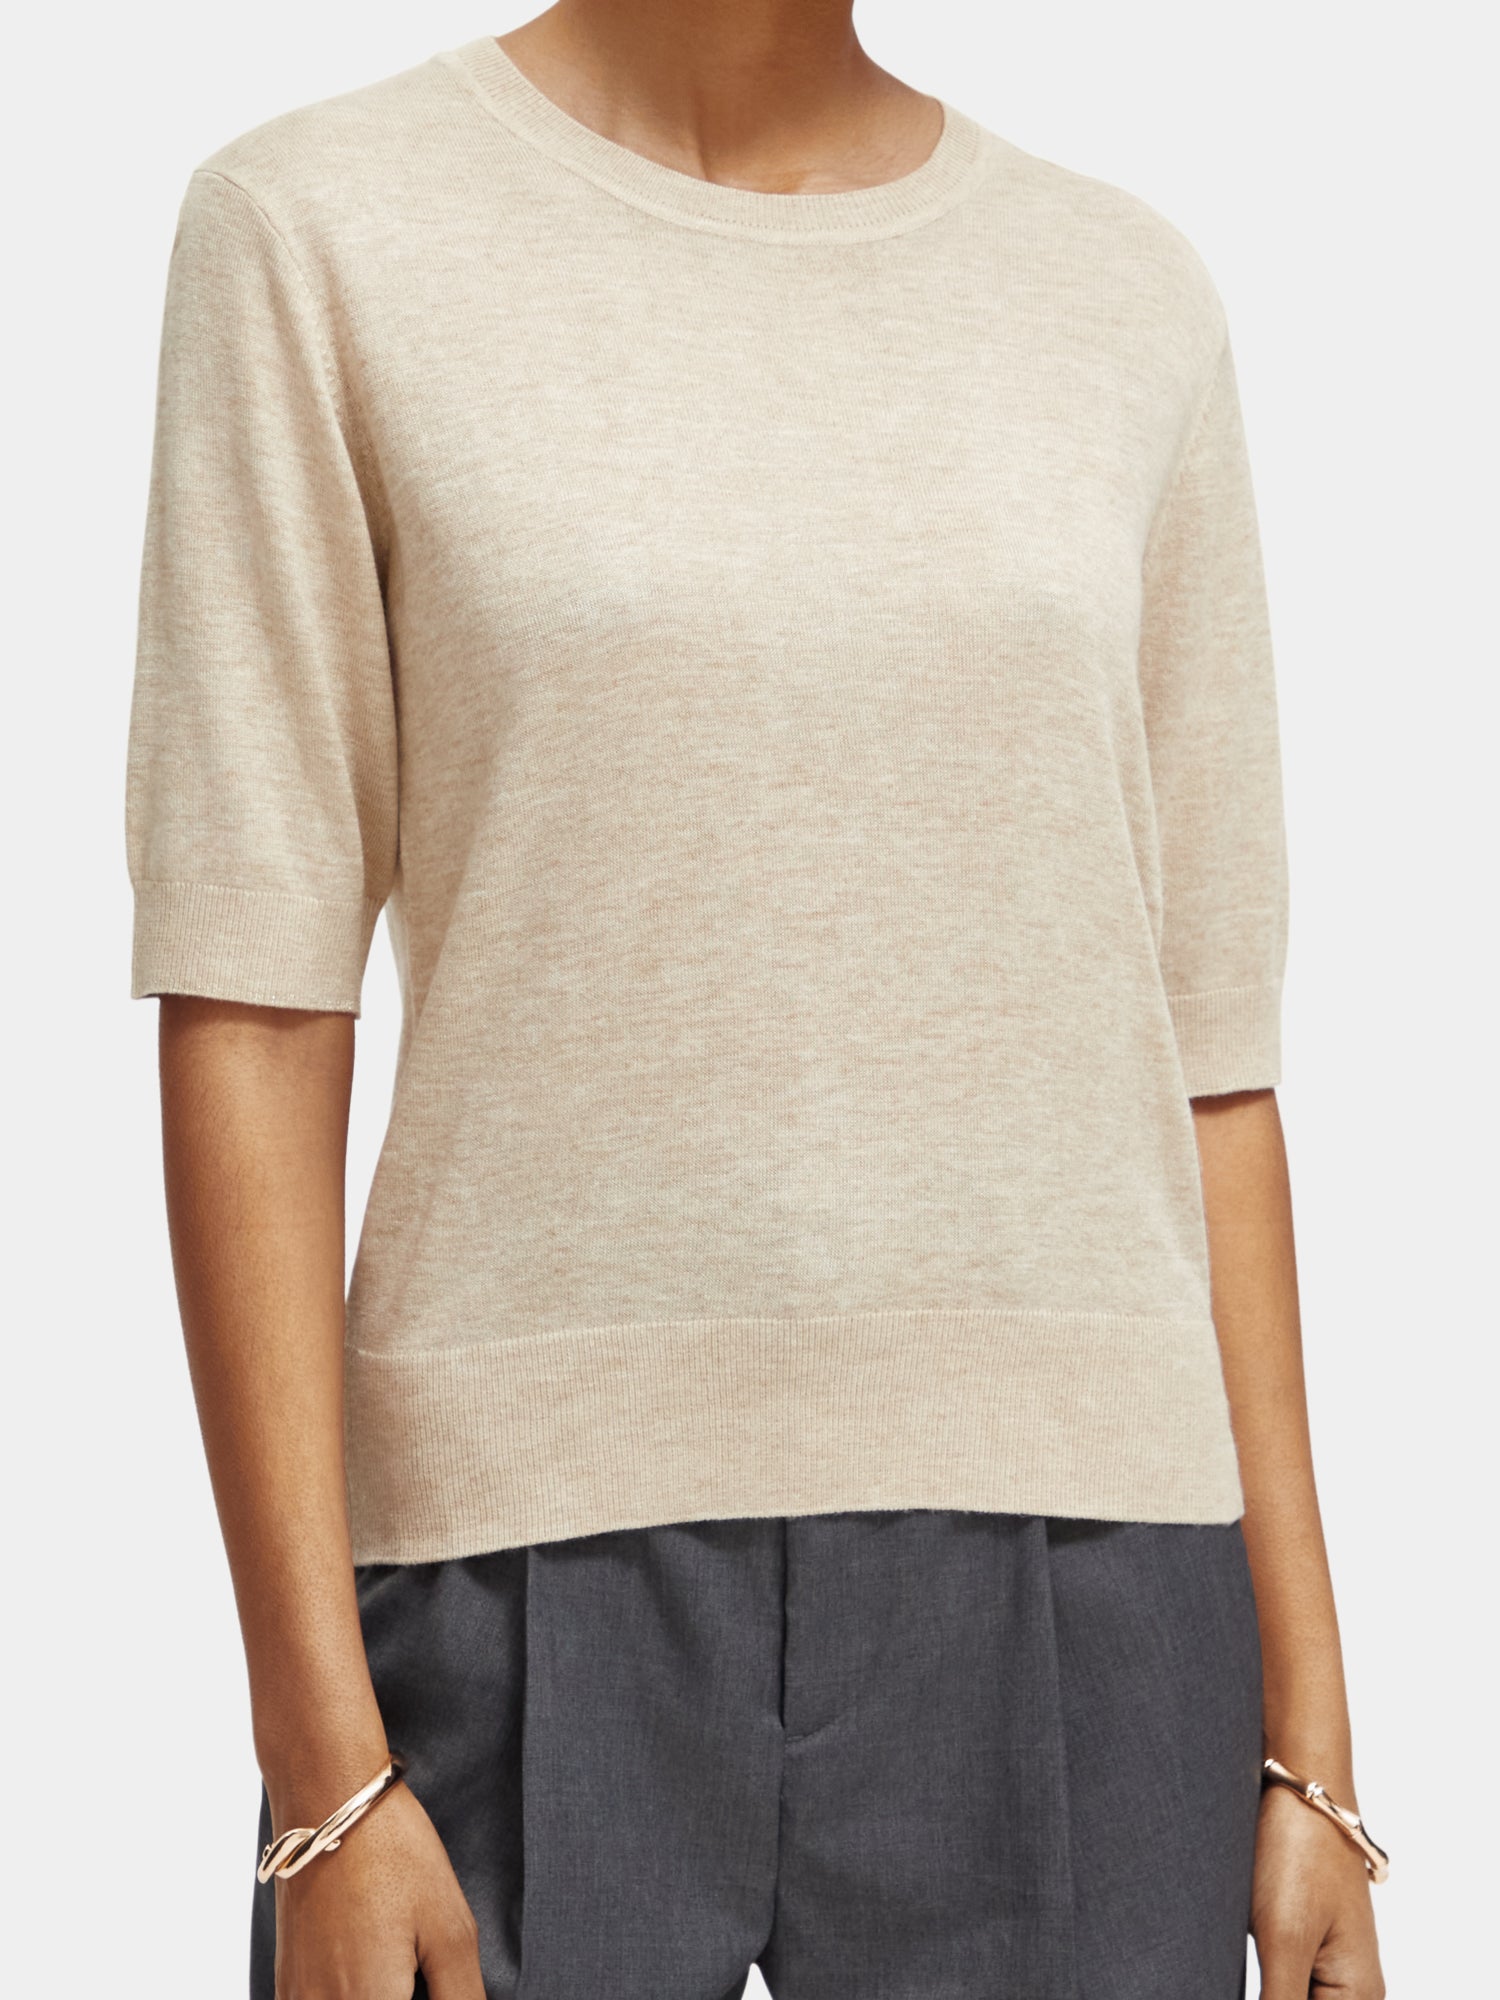 Short sleeved crewneck sweater - Oatmeal Melange